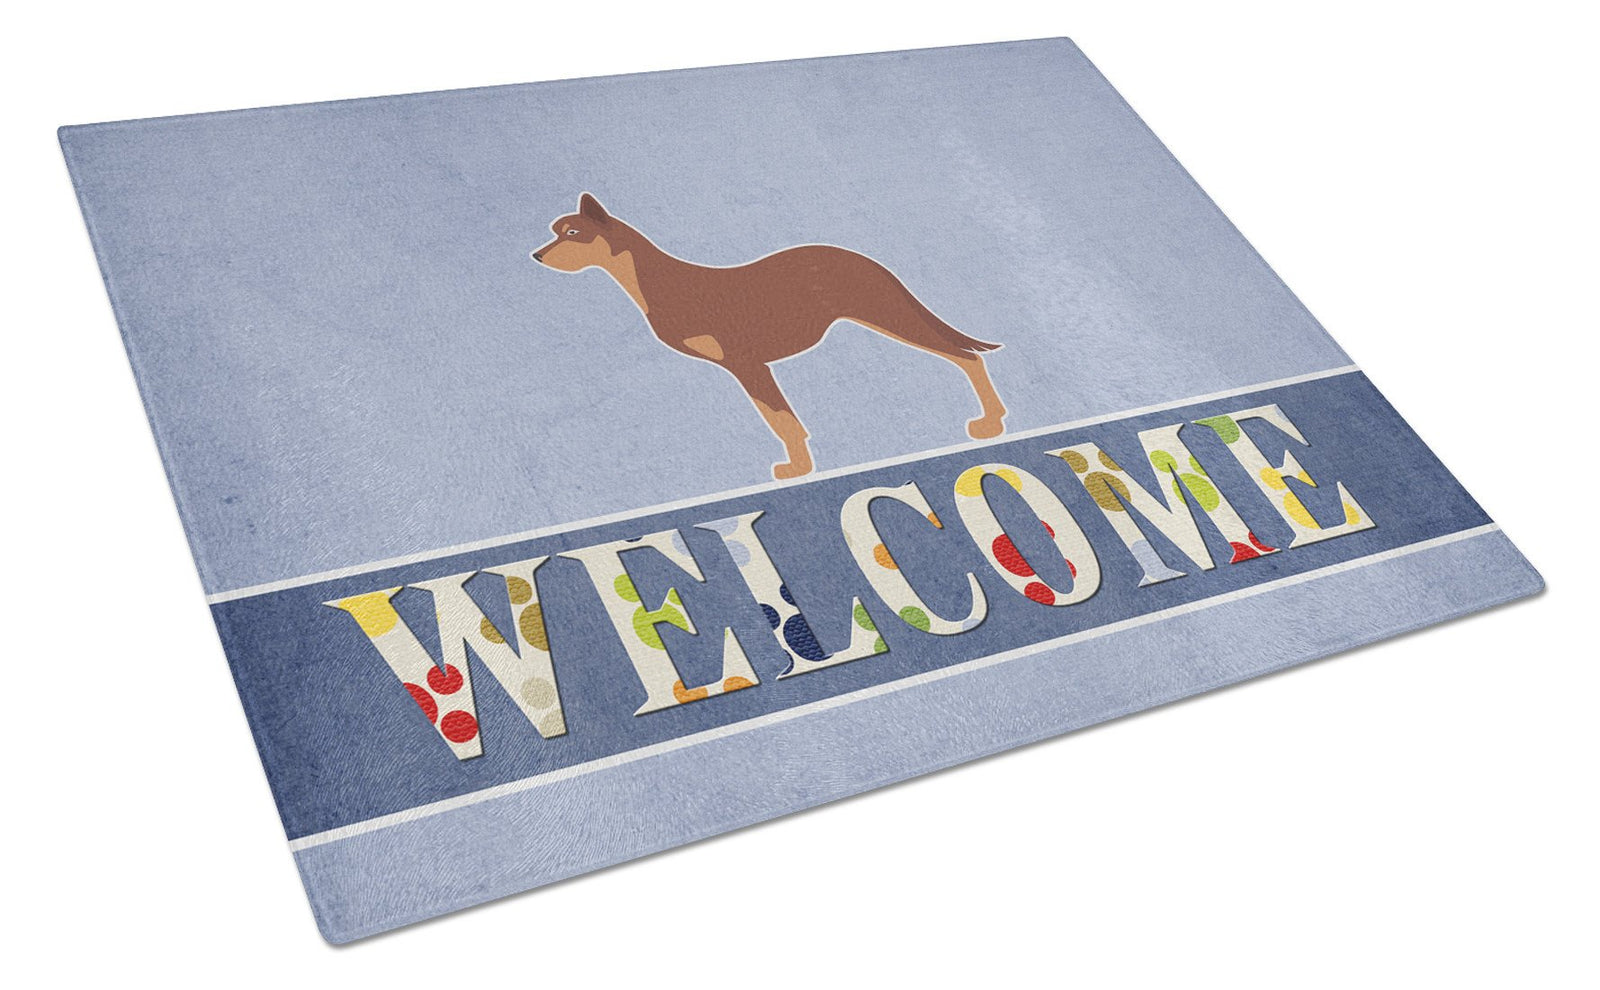 Australian Kelpie Dog Welcome Glass Cutting Board Large BB5533LCB by Caroline's Treasures